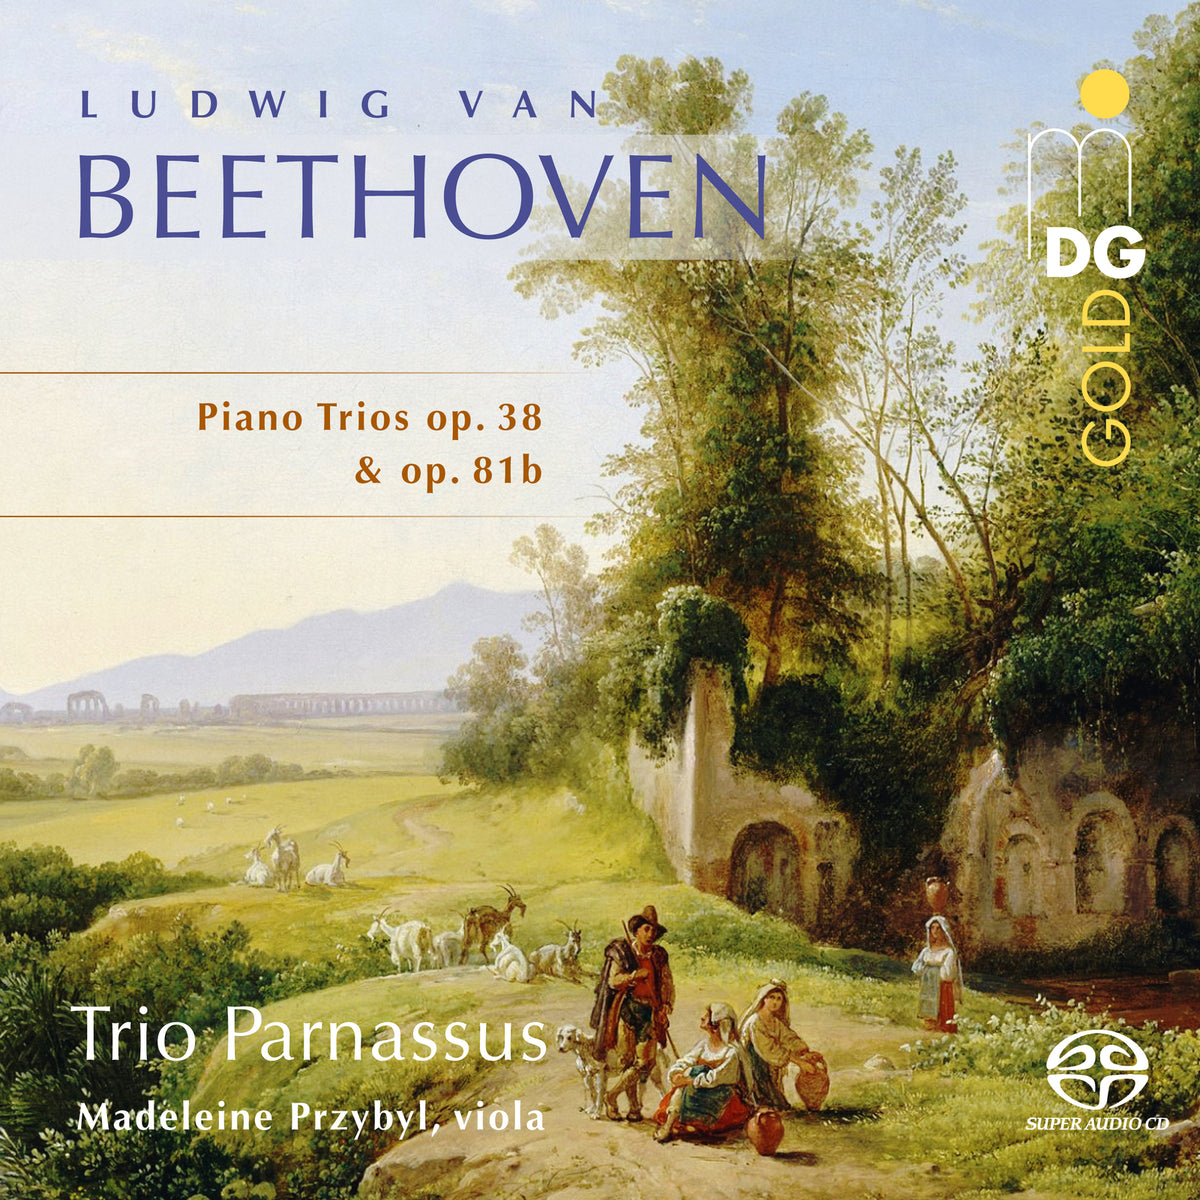 Trio Parnassus, Madeleine Przybyl (viola) - Beethoven: Piano Trios Op. 38 & Op. 81b - MDG90322986